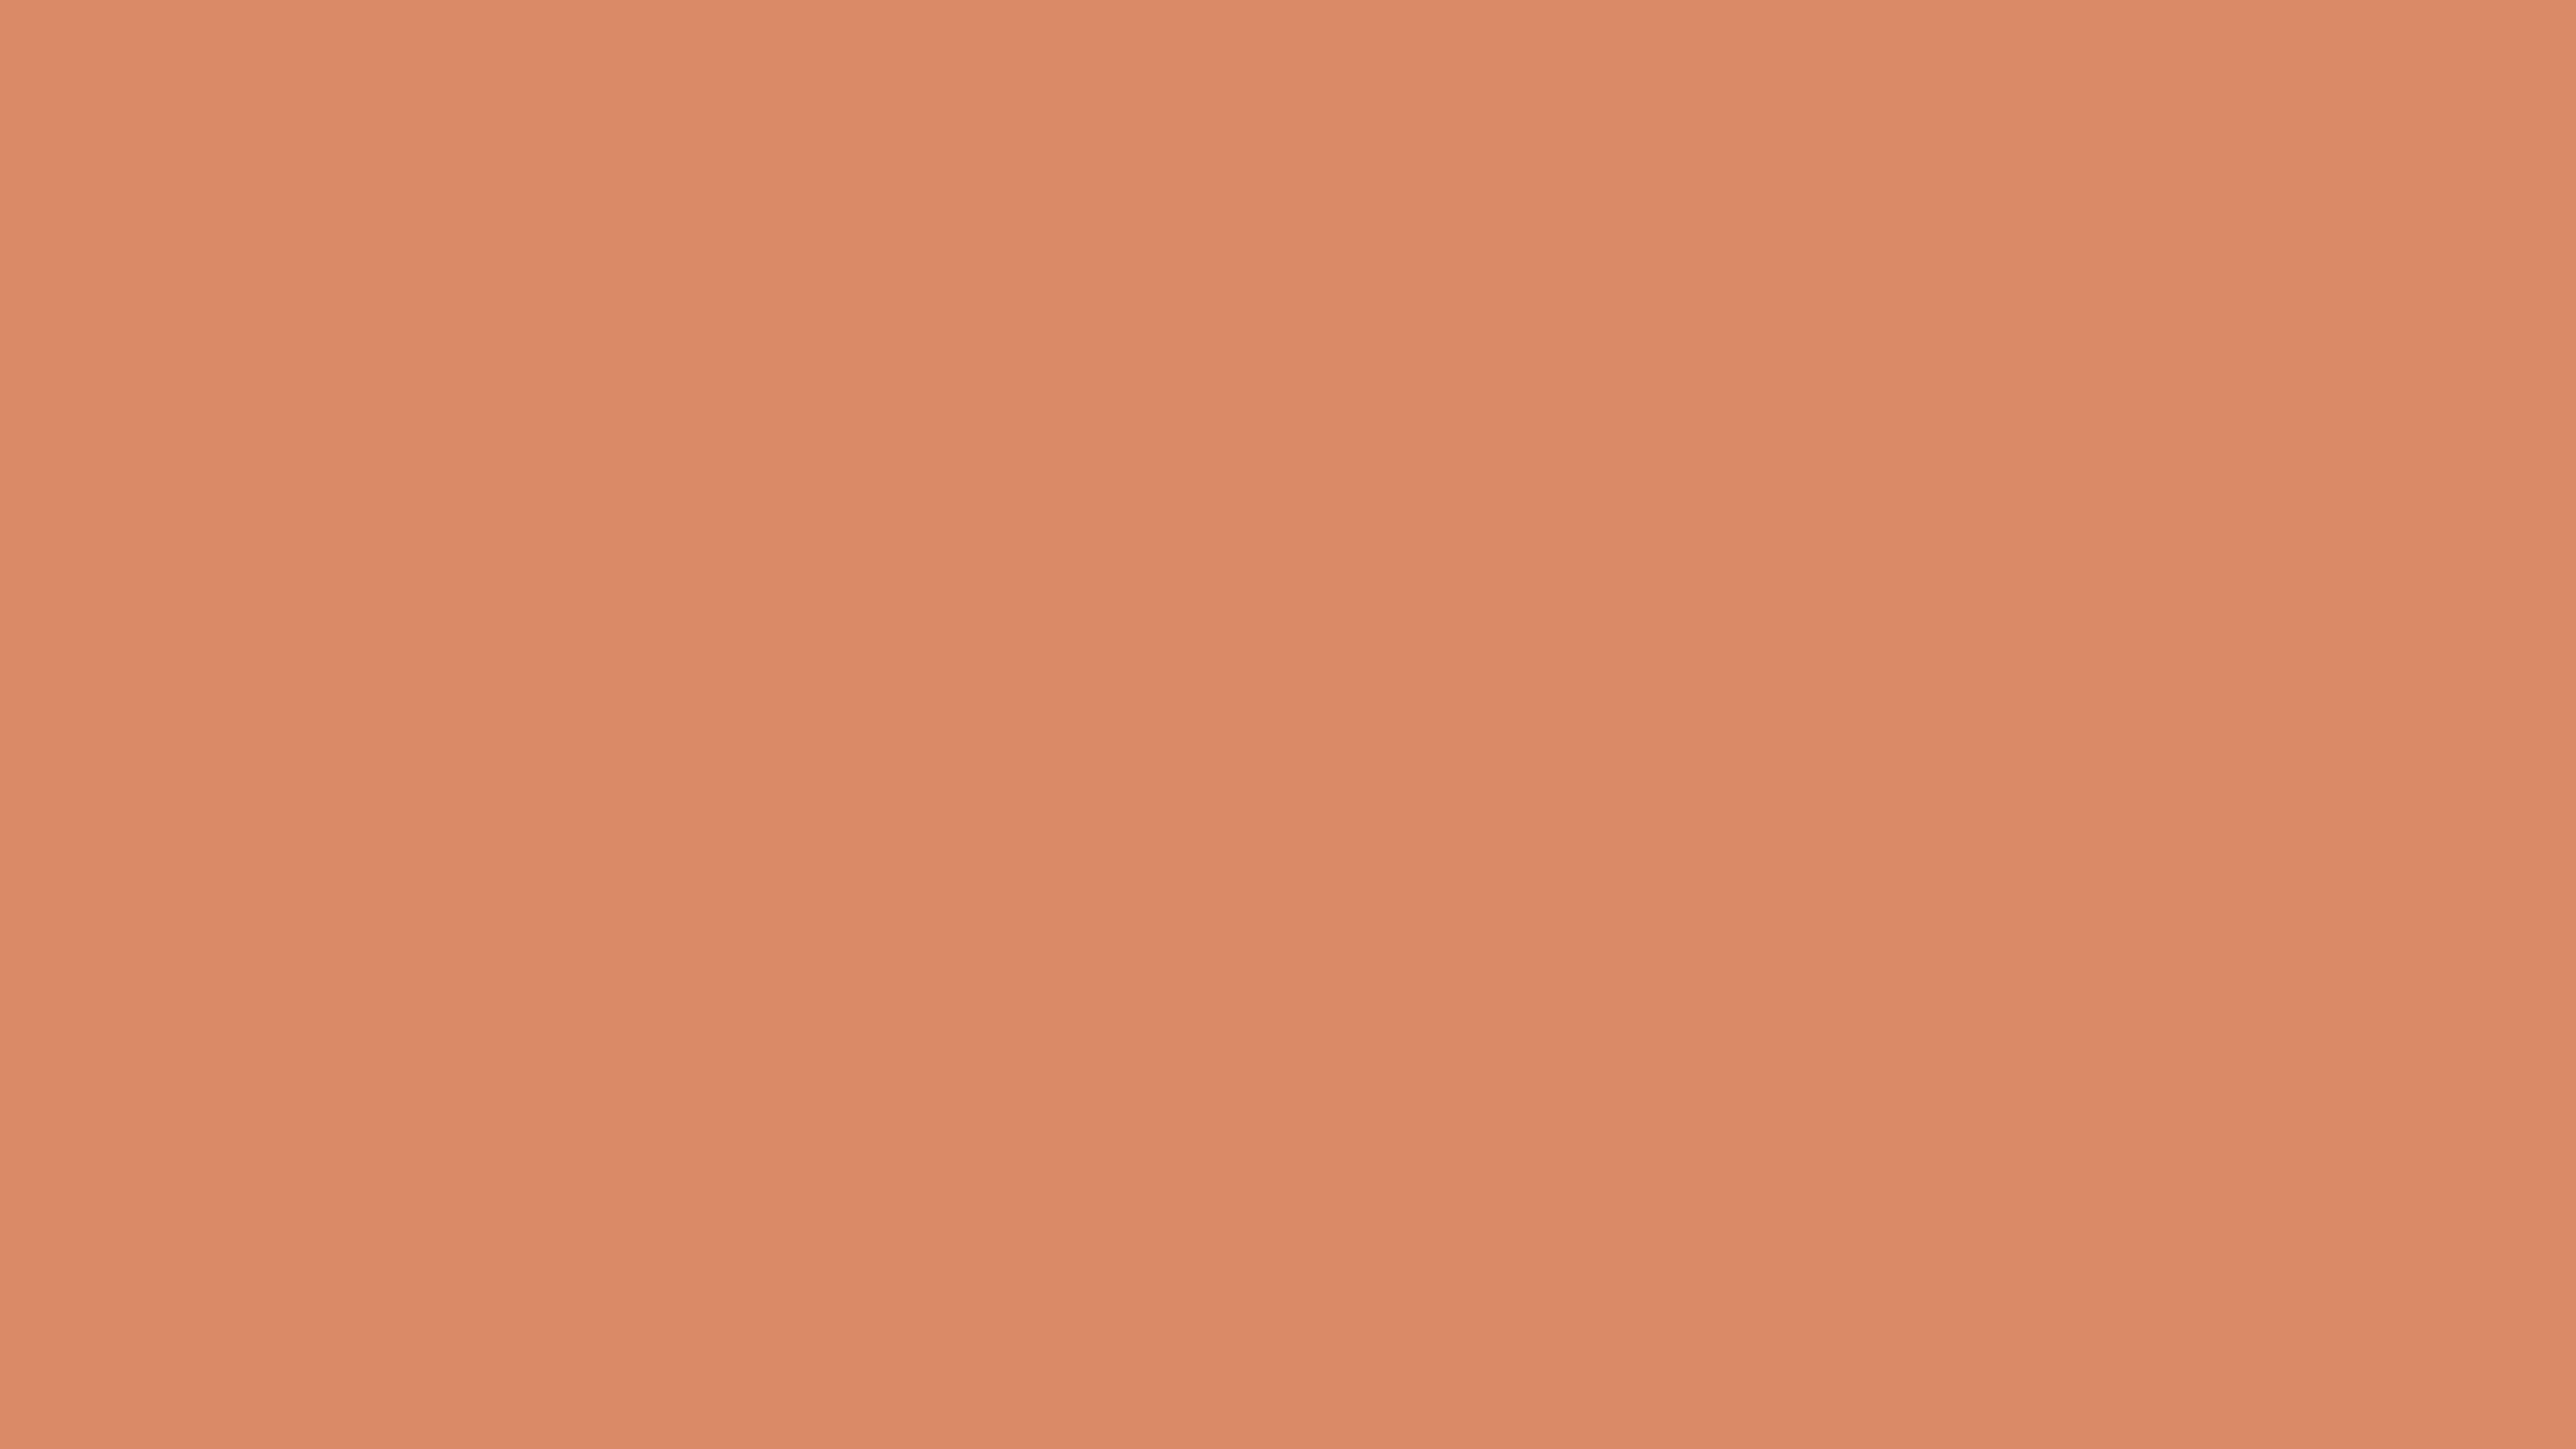 7680x4320 Copper Crayola Solid Color Background